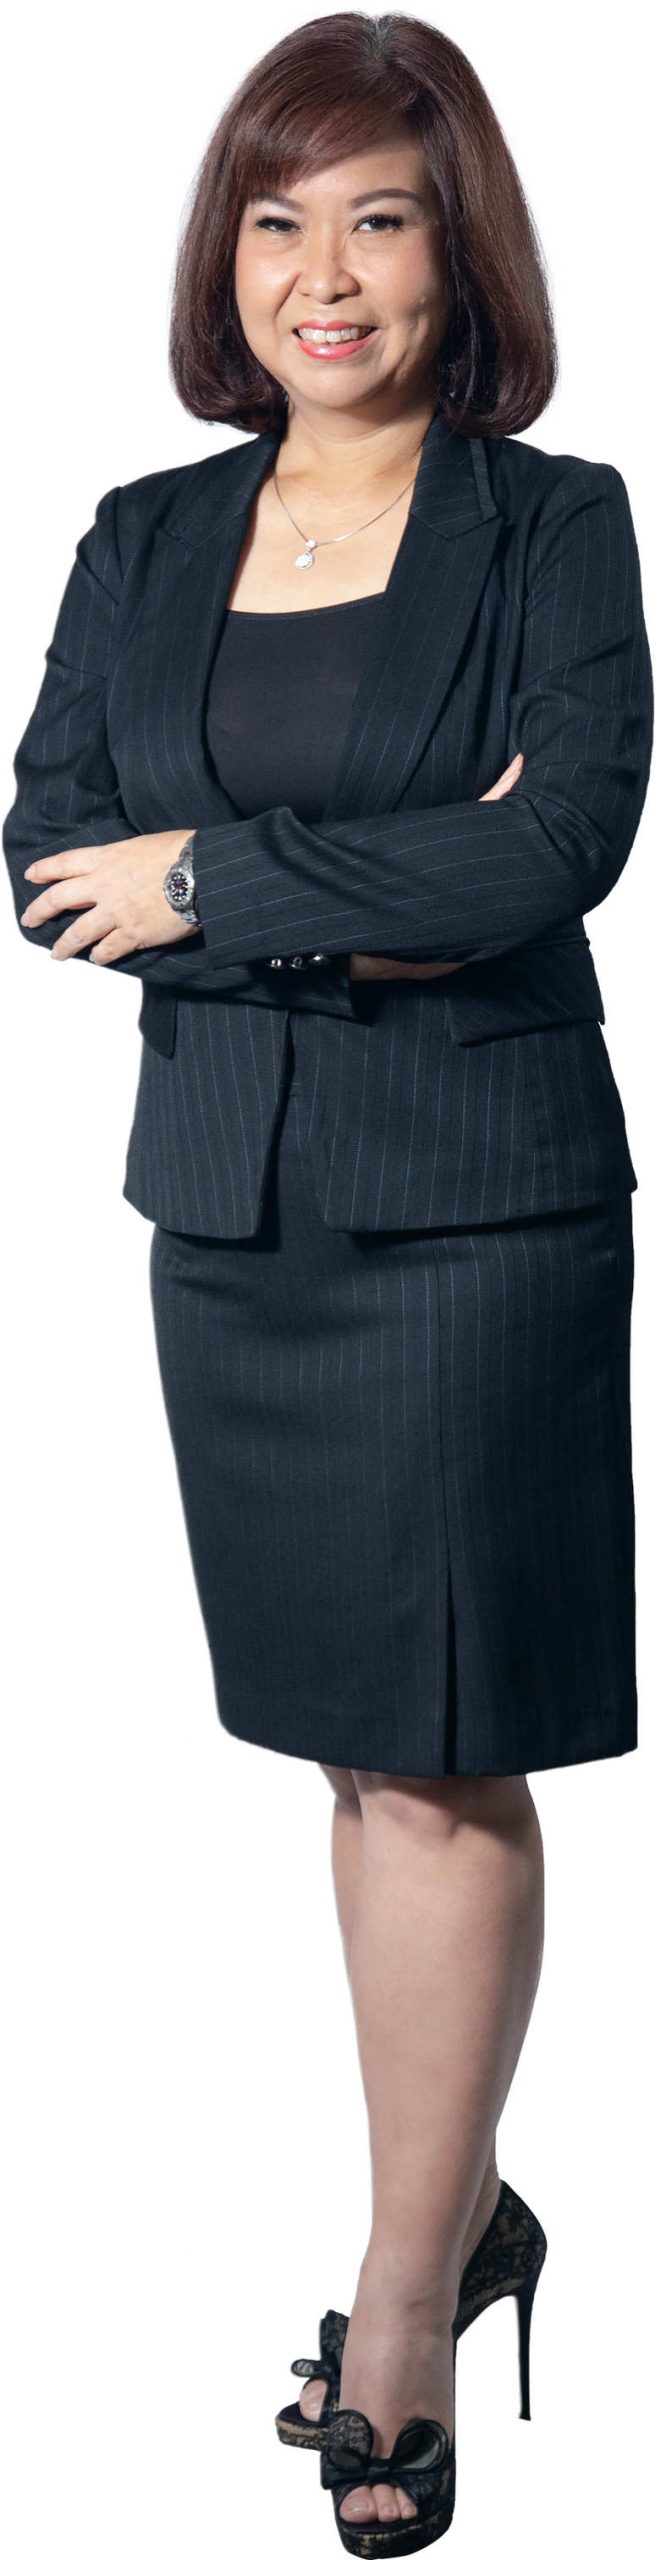 Lea Kusumawijaya,  Chief Financial Officer (CFO) PT Bank Permata Tbk.  